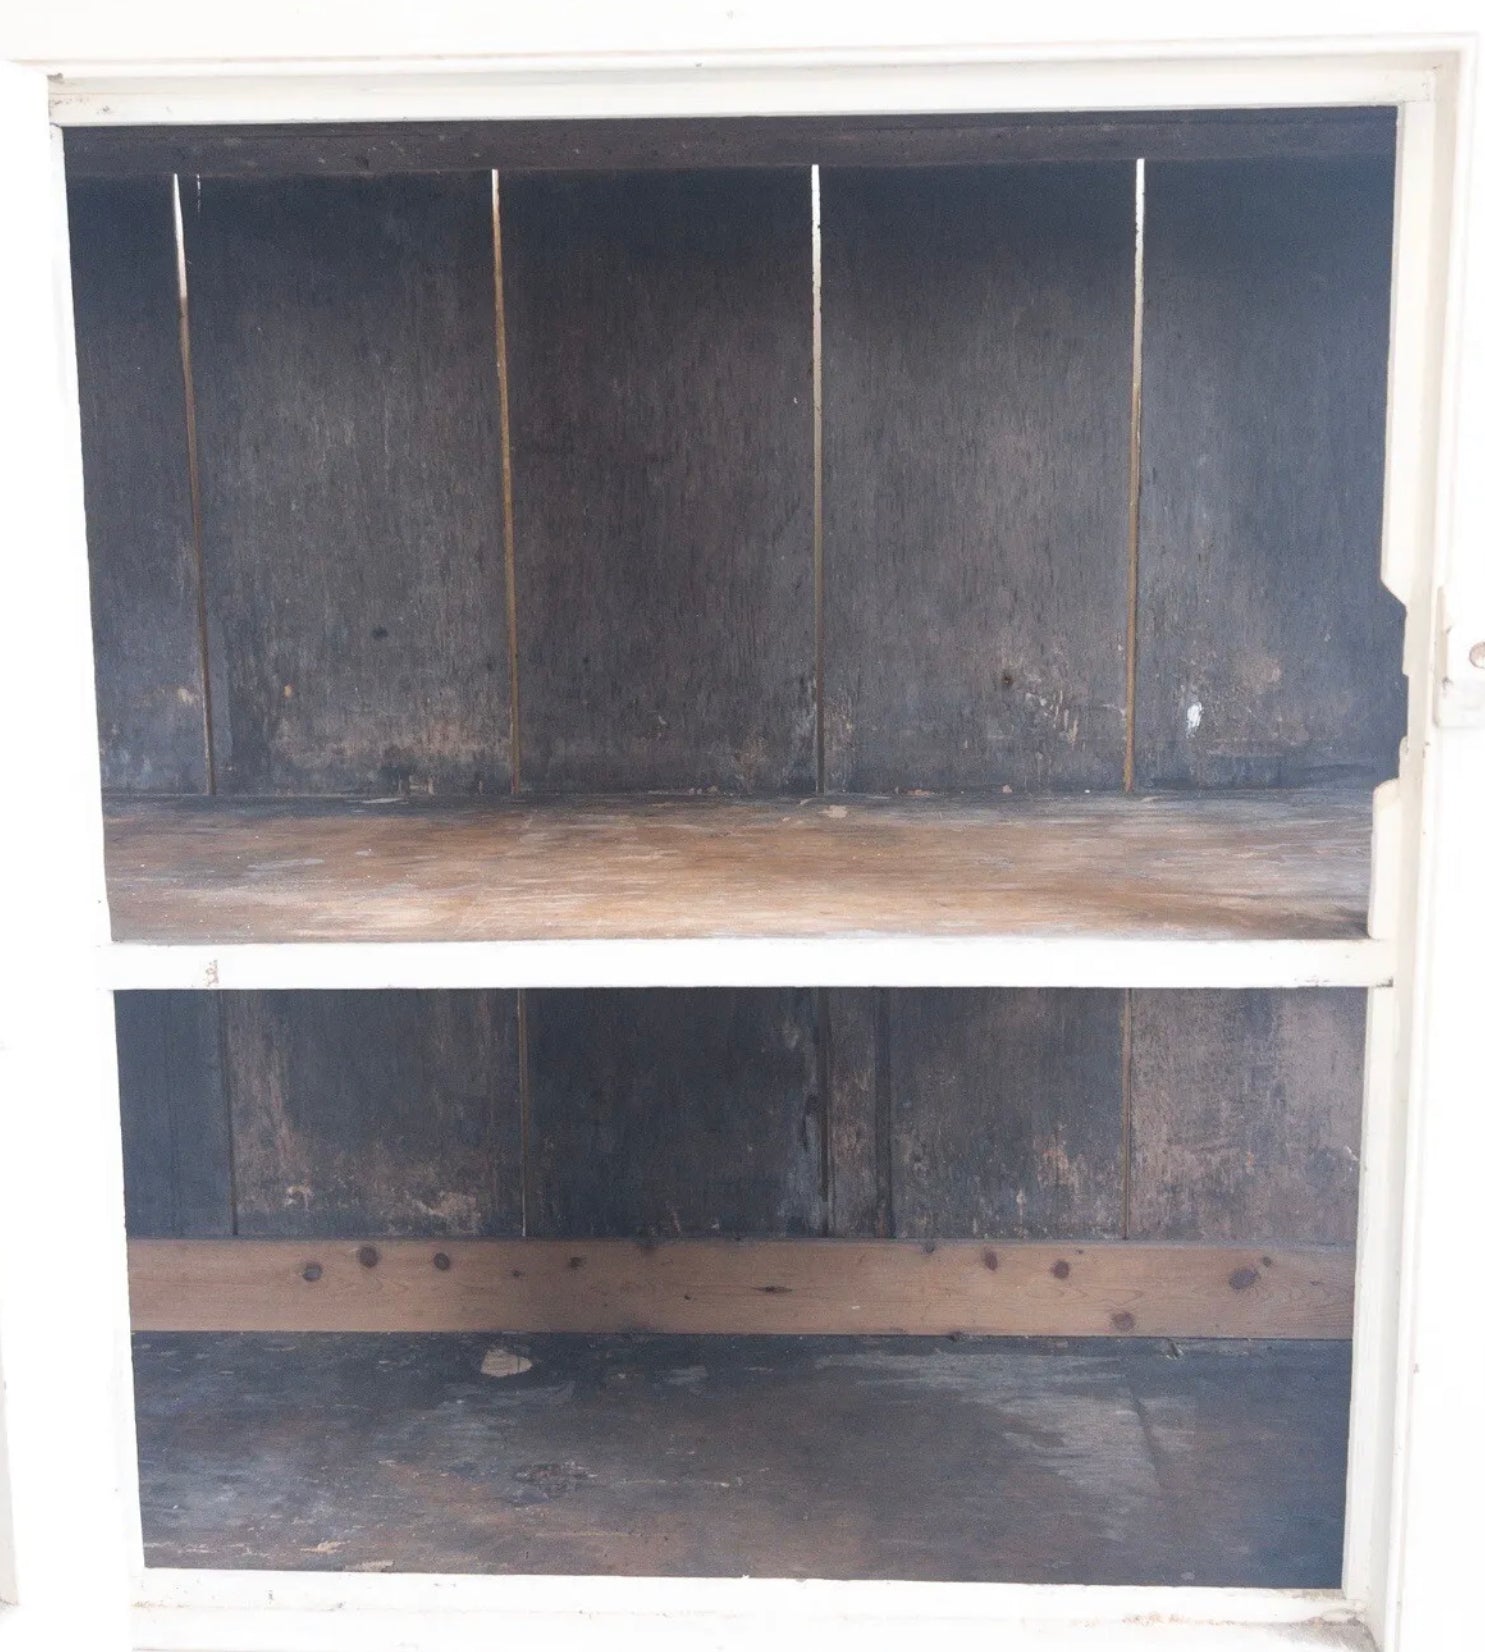 Victorian Pine Meat Safe with Zinc Mesh Panels Kitchen Storage Rustic - teakyfinders